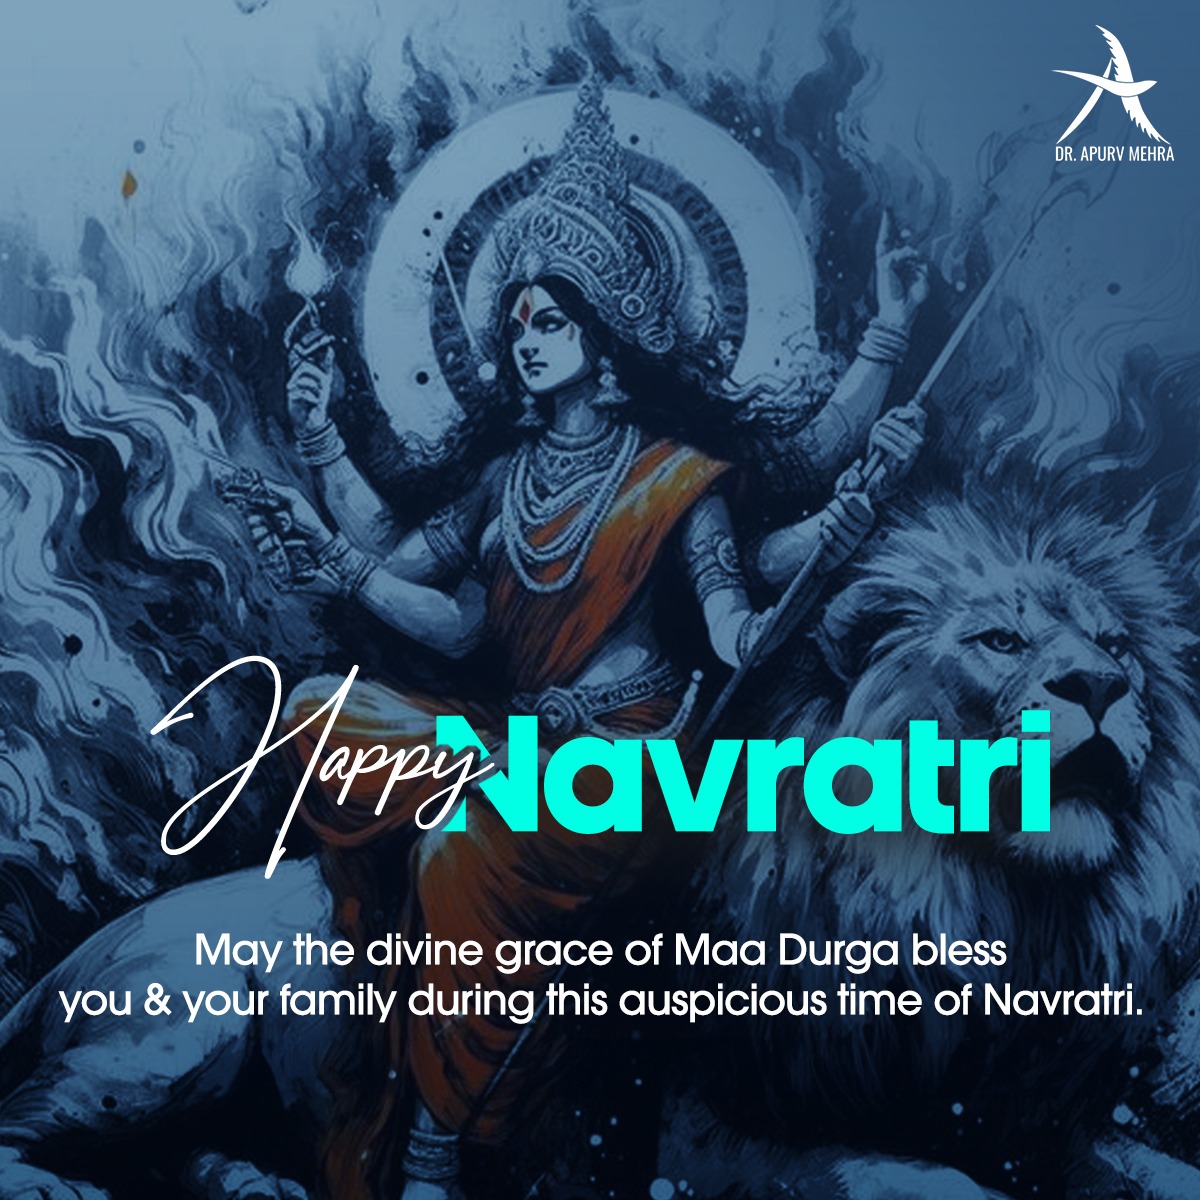 🌟Sending bright Navratri wishes from Dr Apurv Mehra! May this festive season bring you joy and prosperity. 🌺
.
#FestiveGreetings  #LearningCelebration #FestiveCheers #BestWishes #NavratriWishes #DrApurvMehra